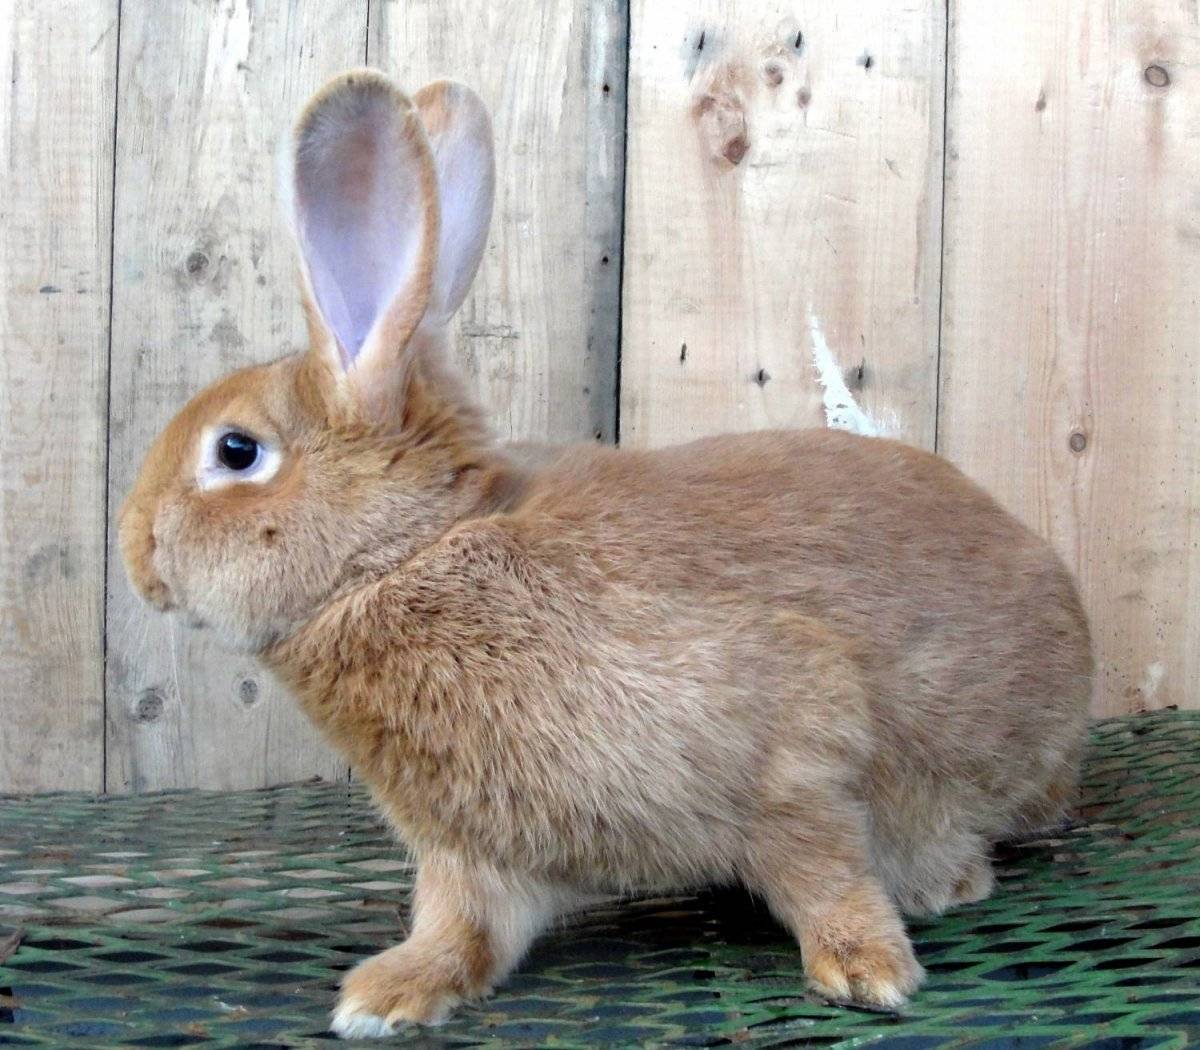 ᐉ обзор рыжих пород кроликов: описание и характеристики - zooon.ru